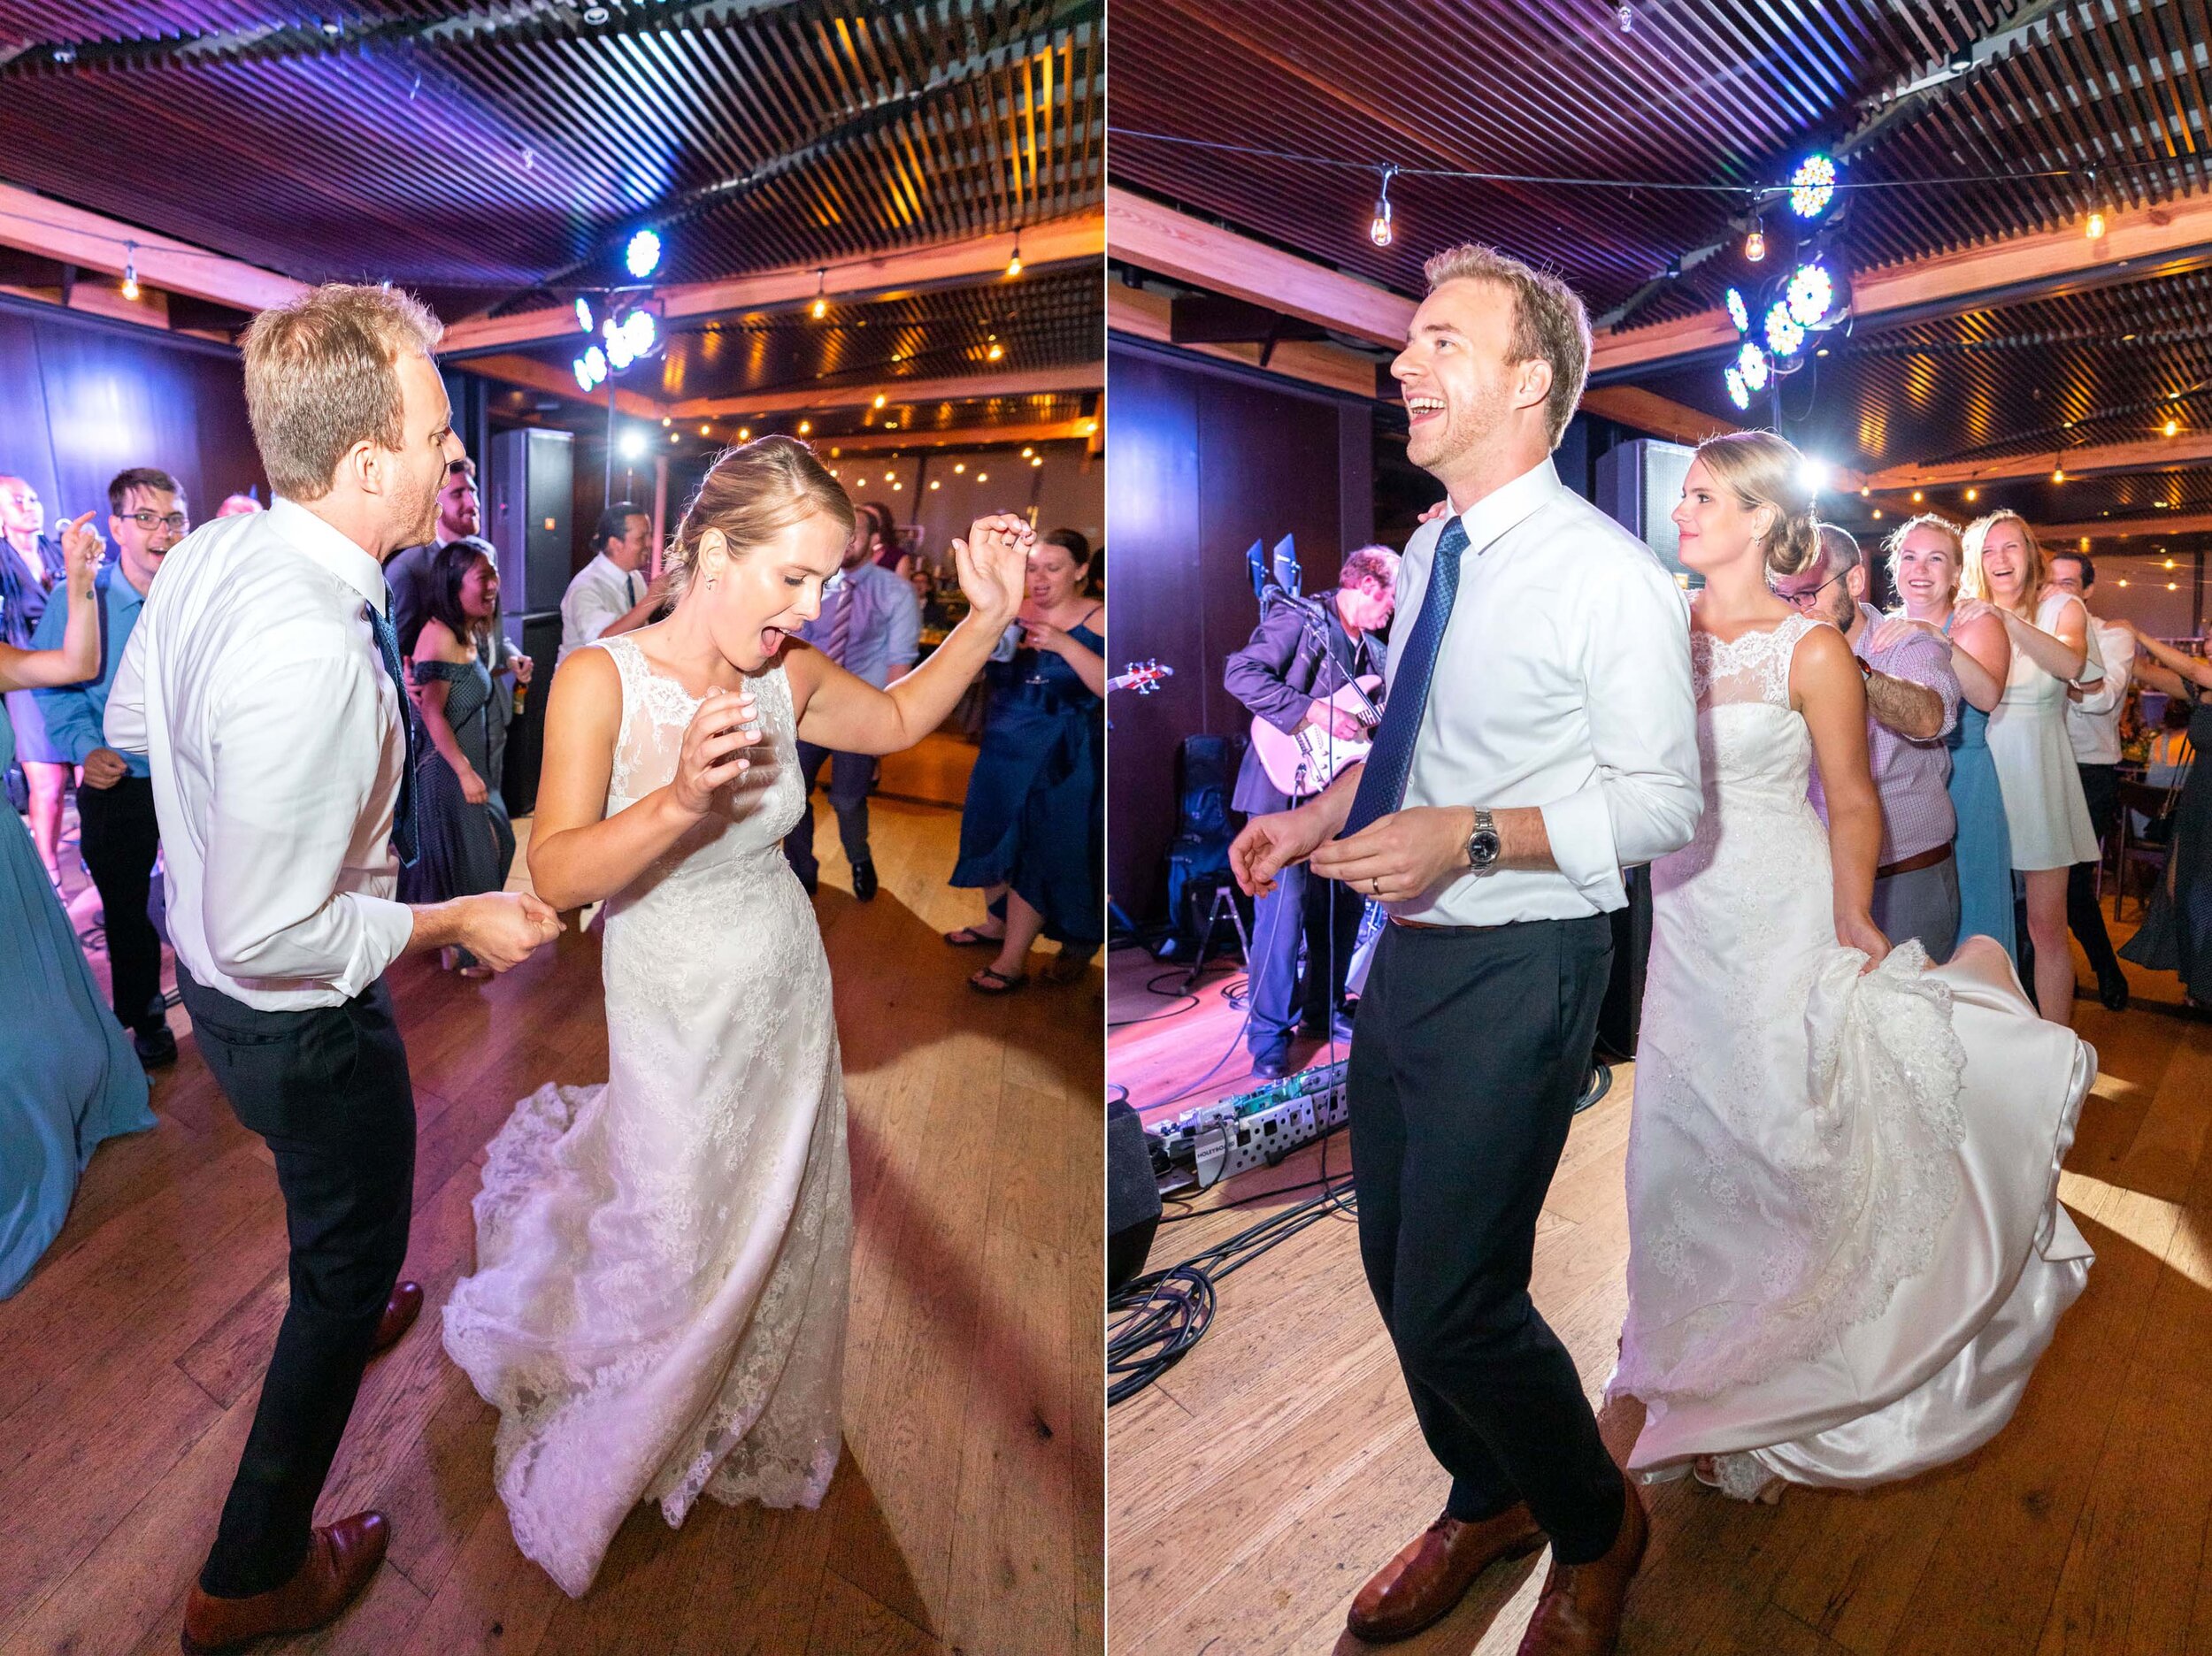 Colorful dance floor photos with fun wedding photographer